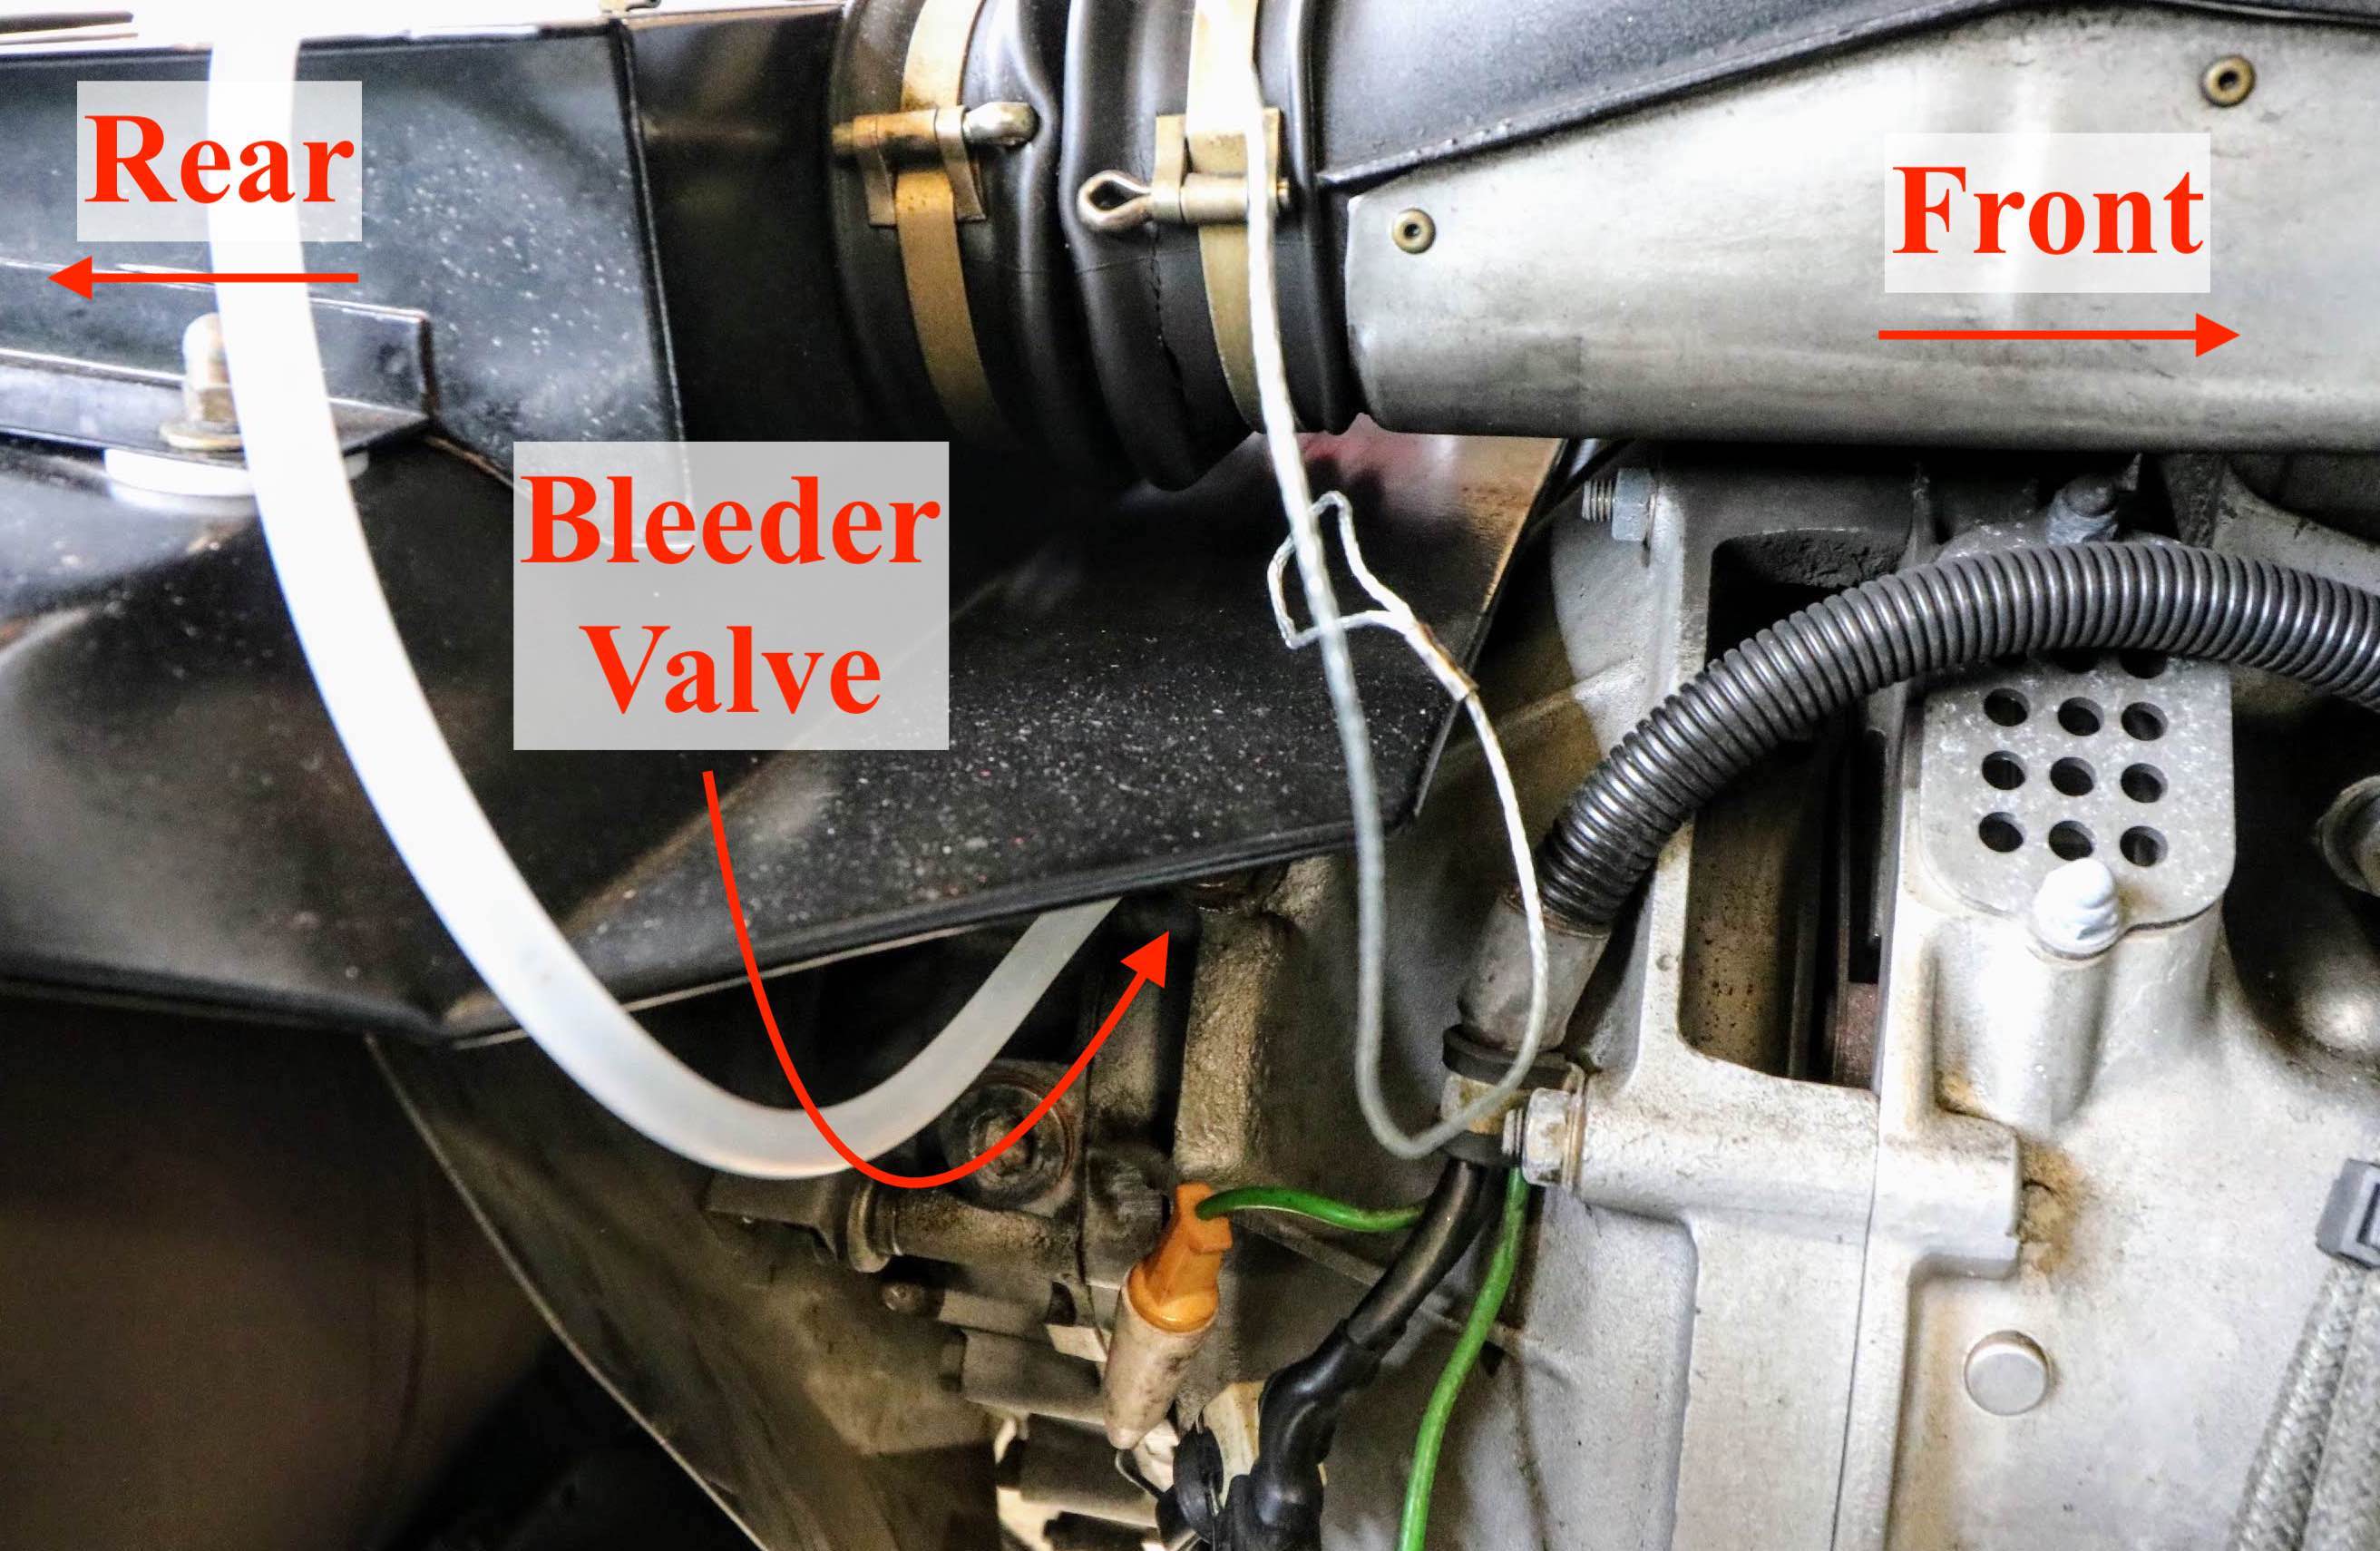 Ferrari Testarossa clutch fluid bleeder valve location